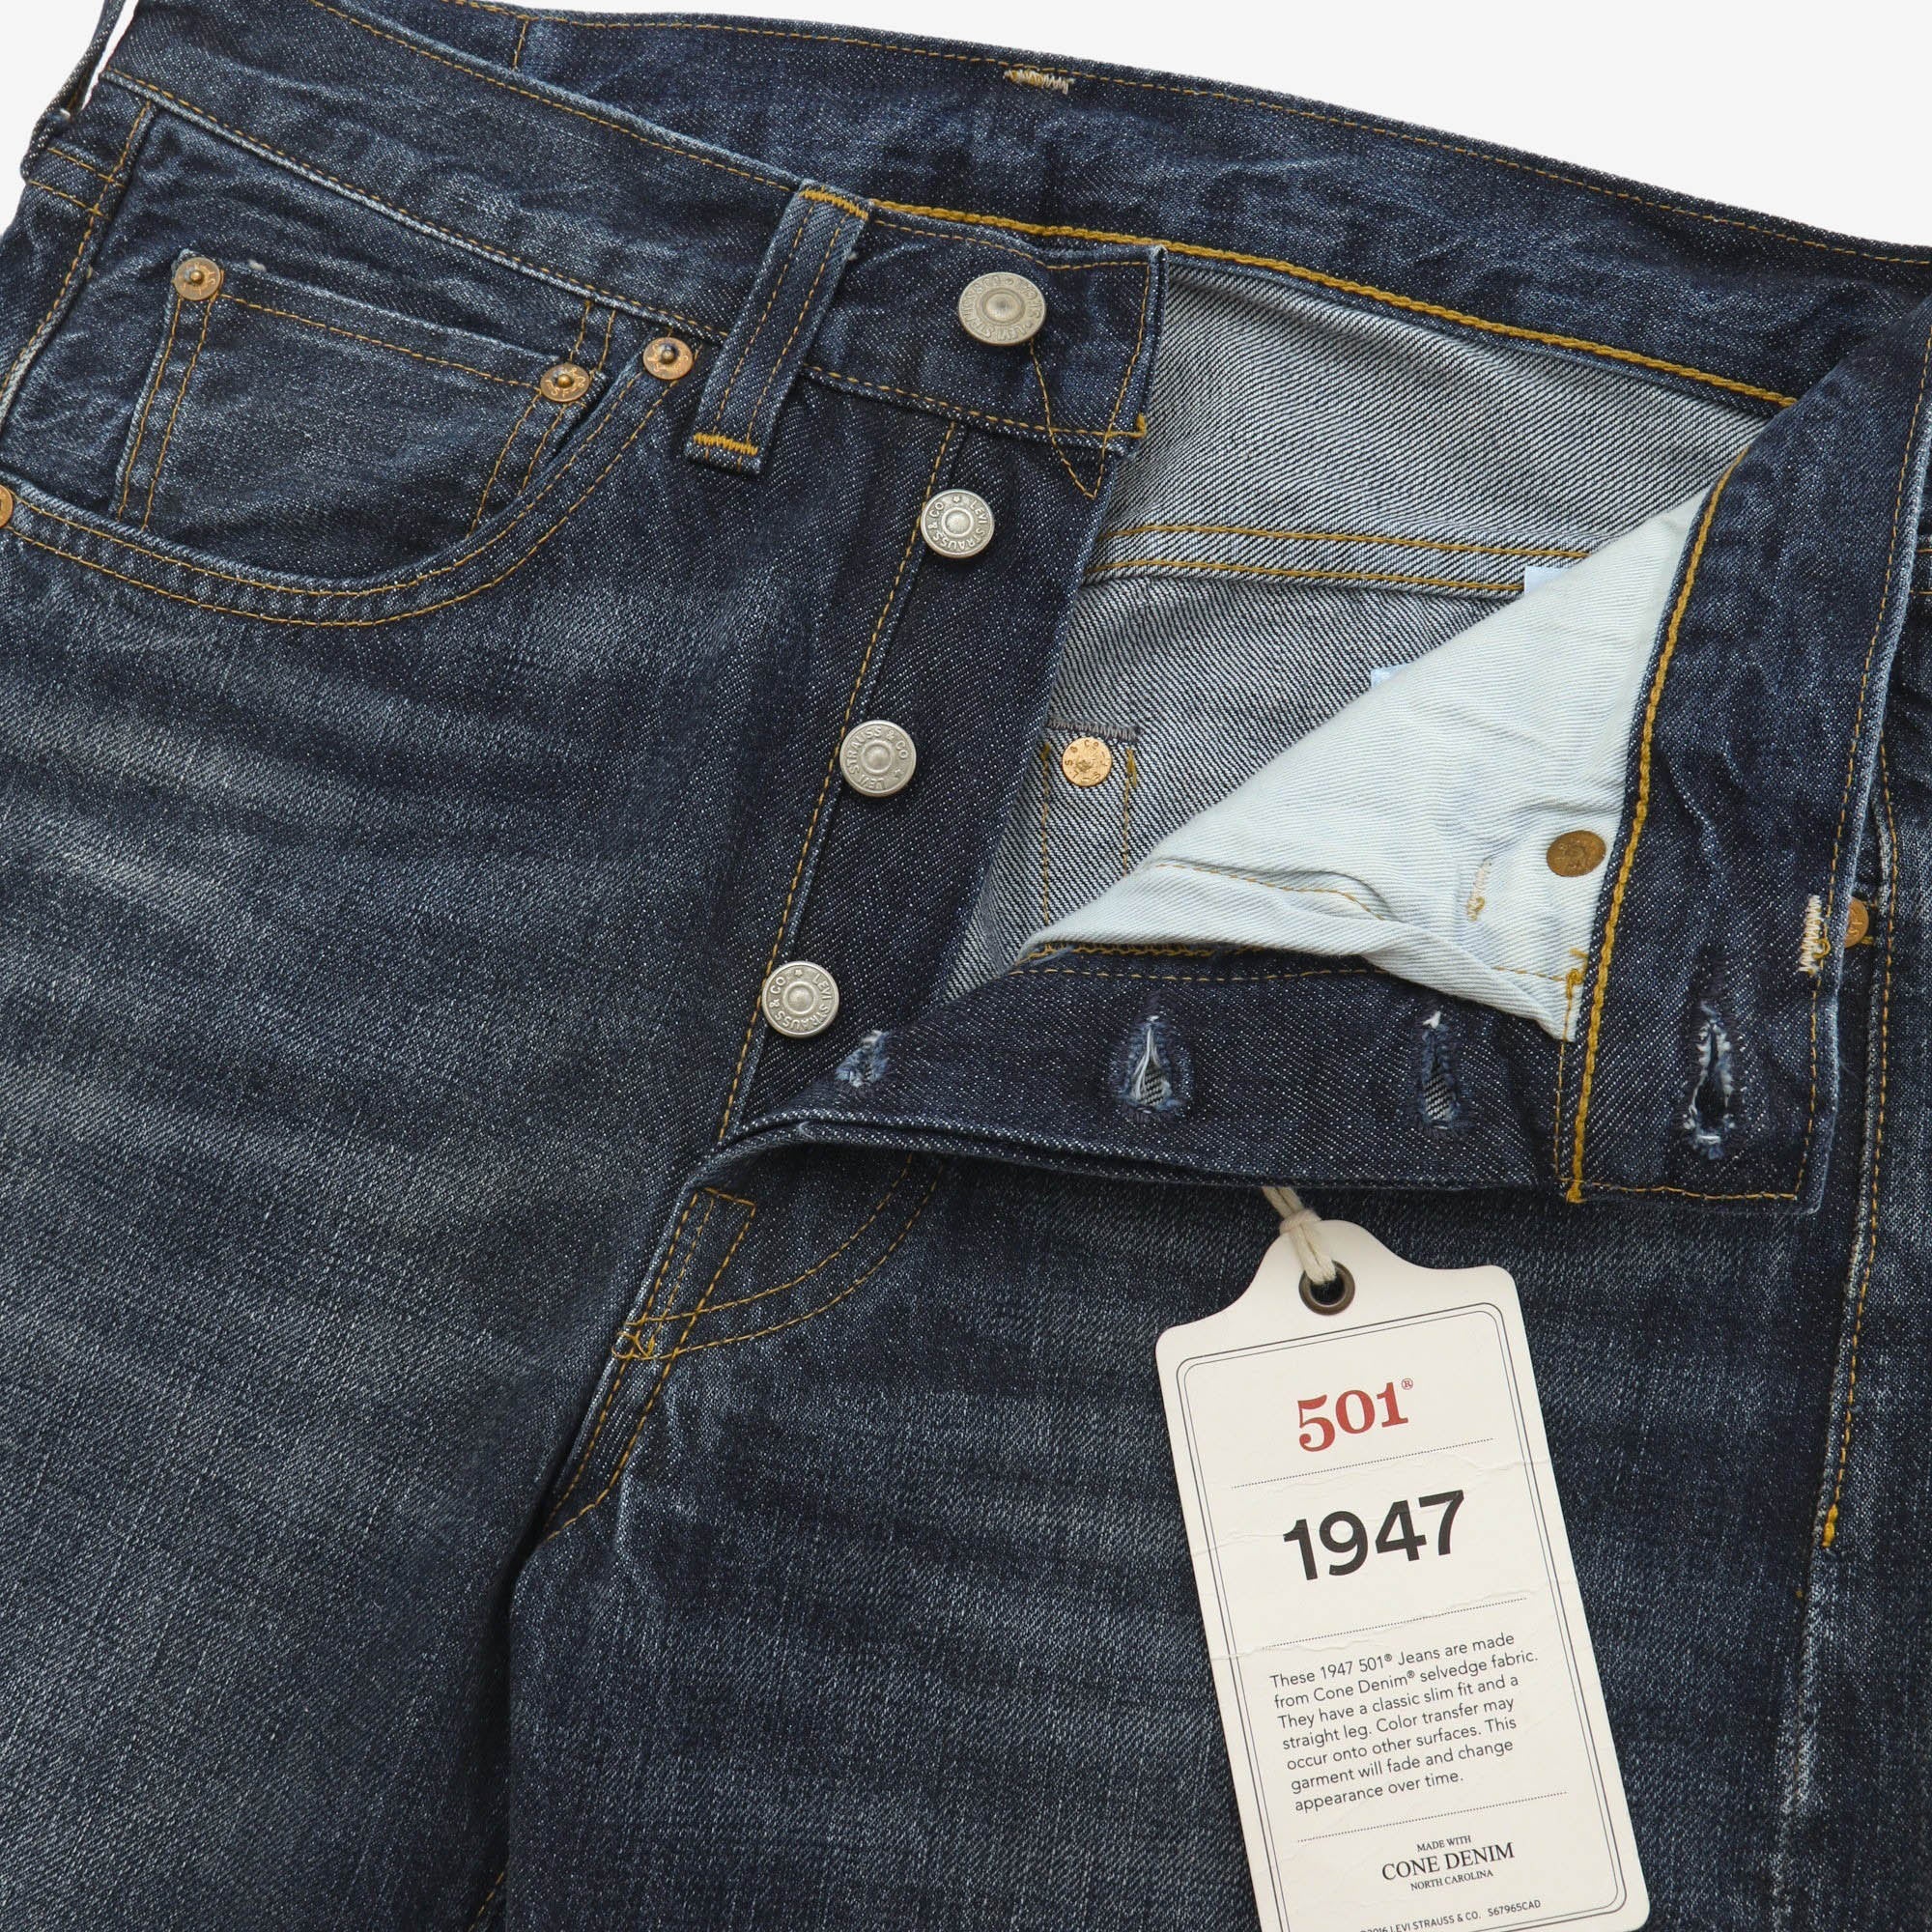 1947 Lot 501XX Jeans (USA)